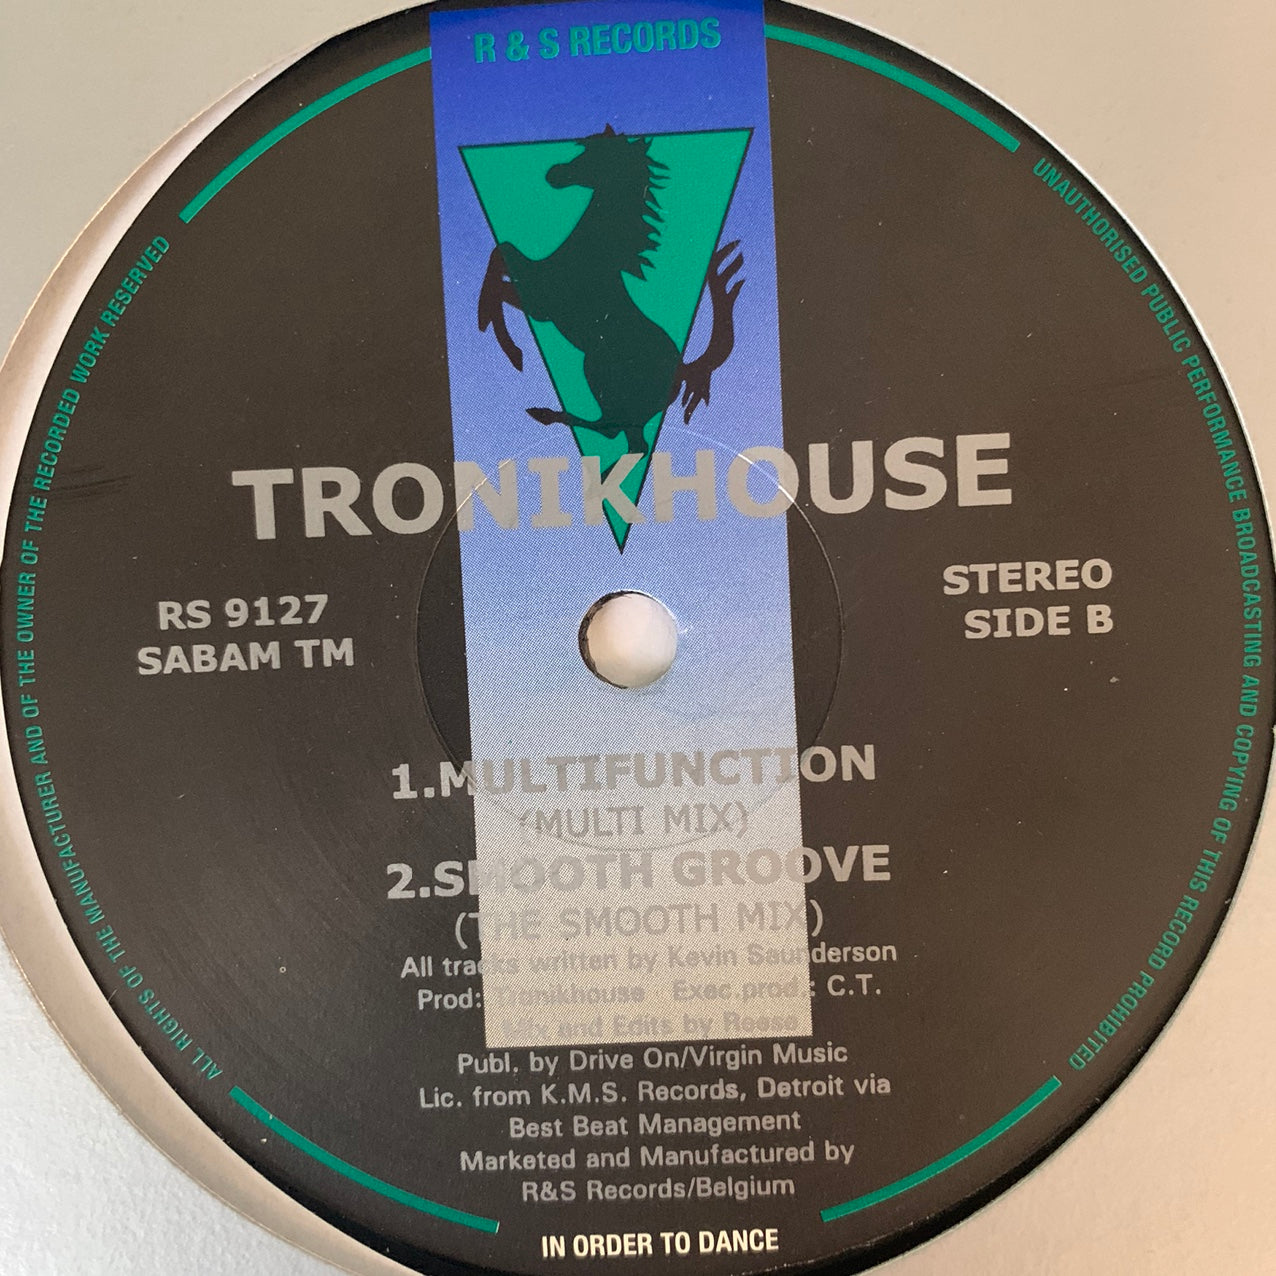 Tronikhouse “Multifunction” 2 Track 12inch Vinyl